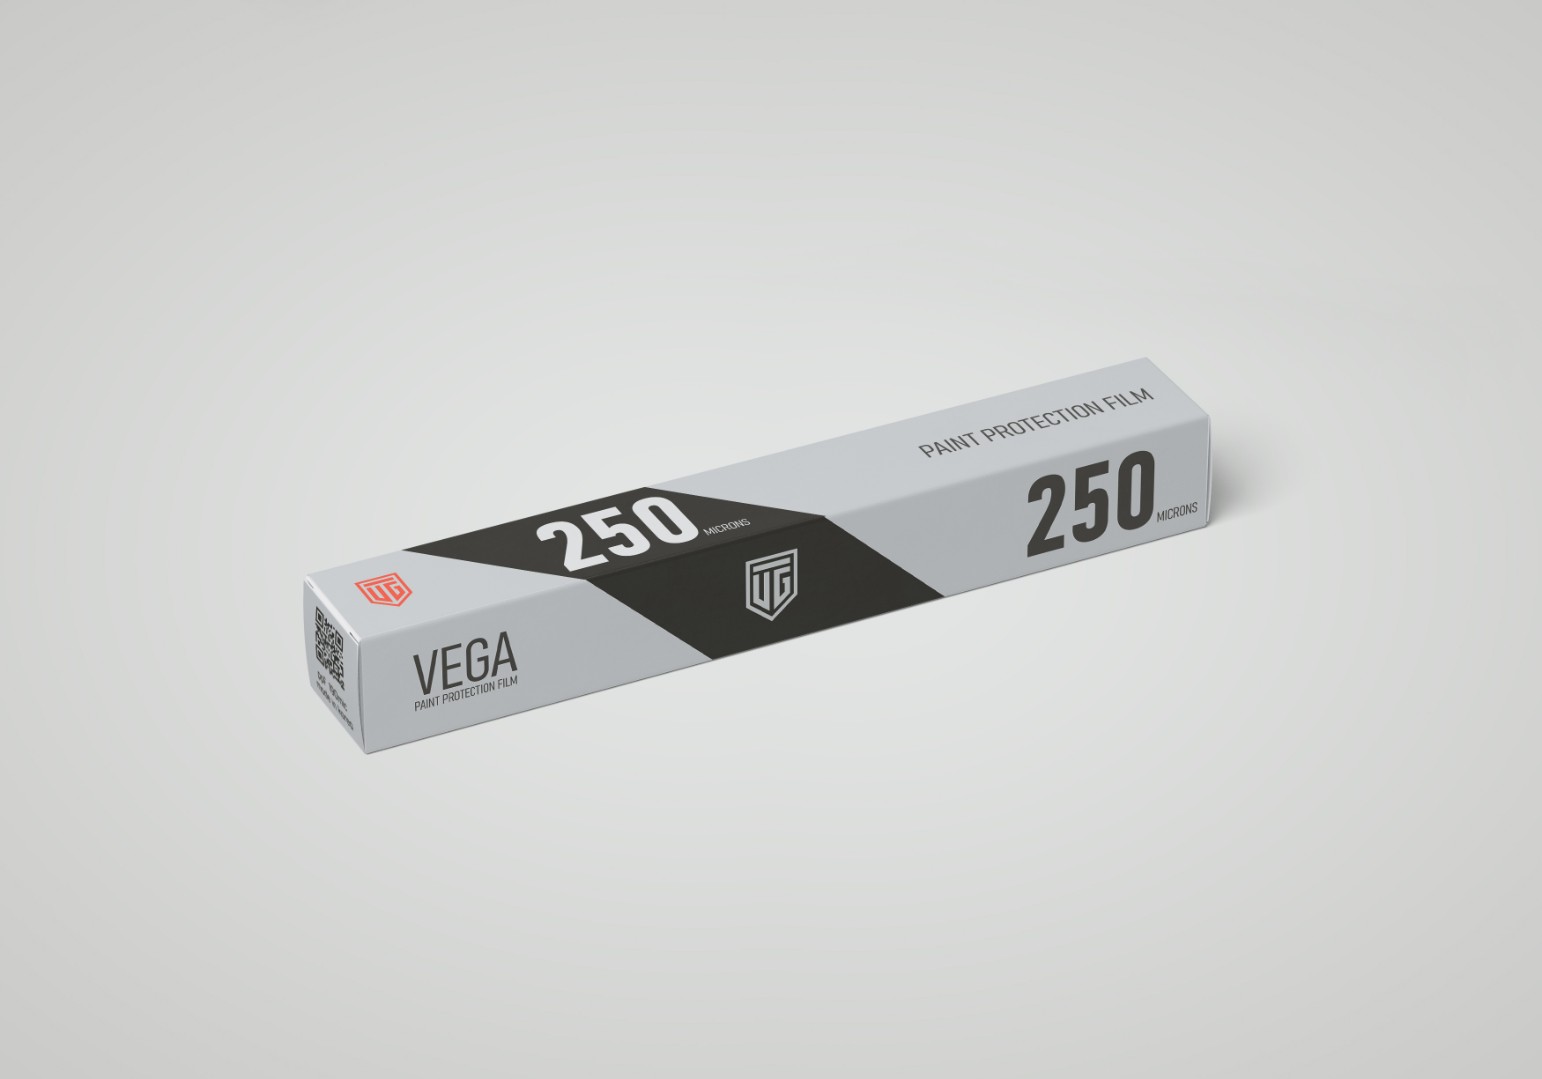 VEGA 250 HT series